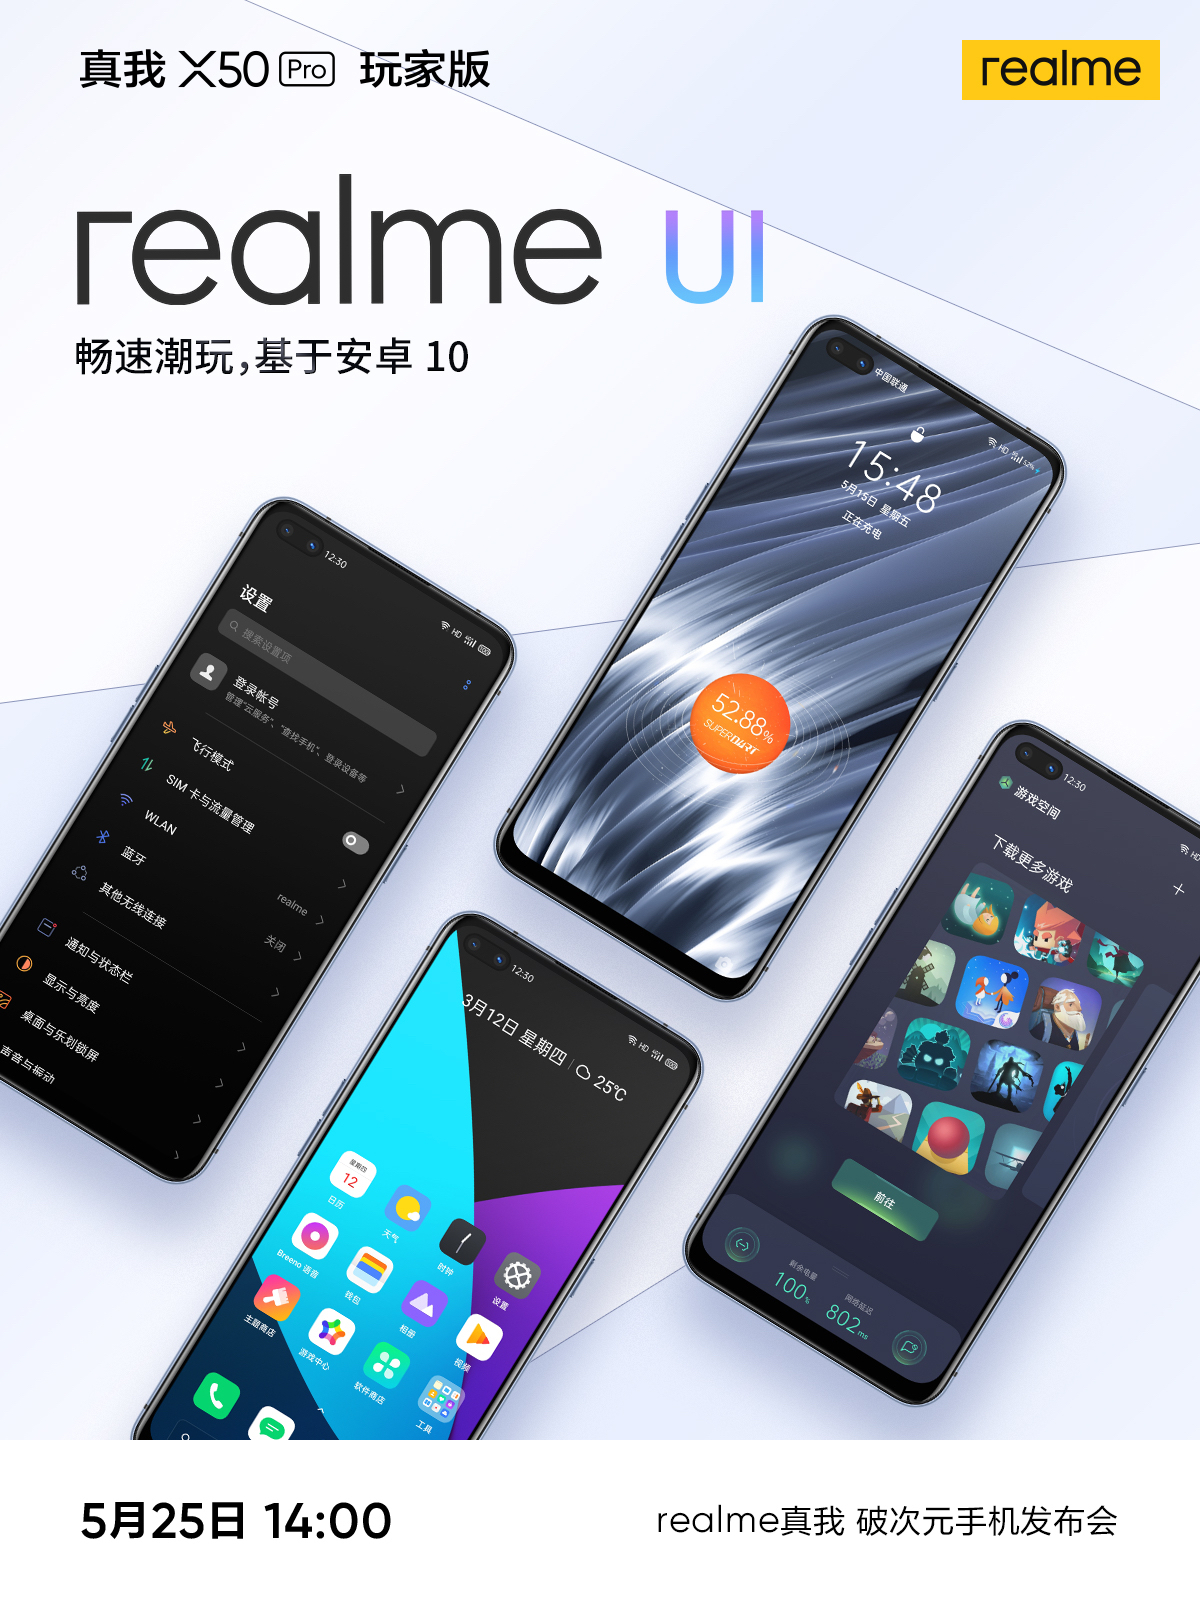  Лайт-версия Realme X50 Pro, анонс 25 мая. Больше деталей Другие устройства  - realme_gotovit_lajt_versiu_realme_x50_pro_anons_na_sleduuschej_nedele_6